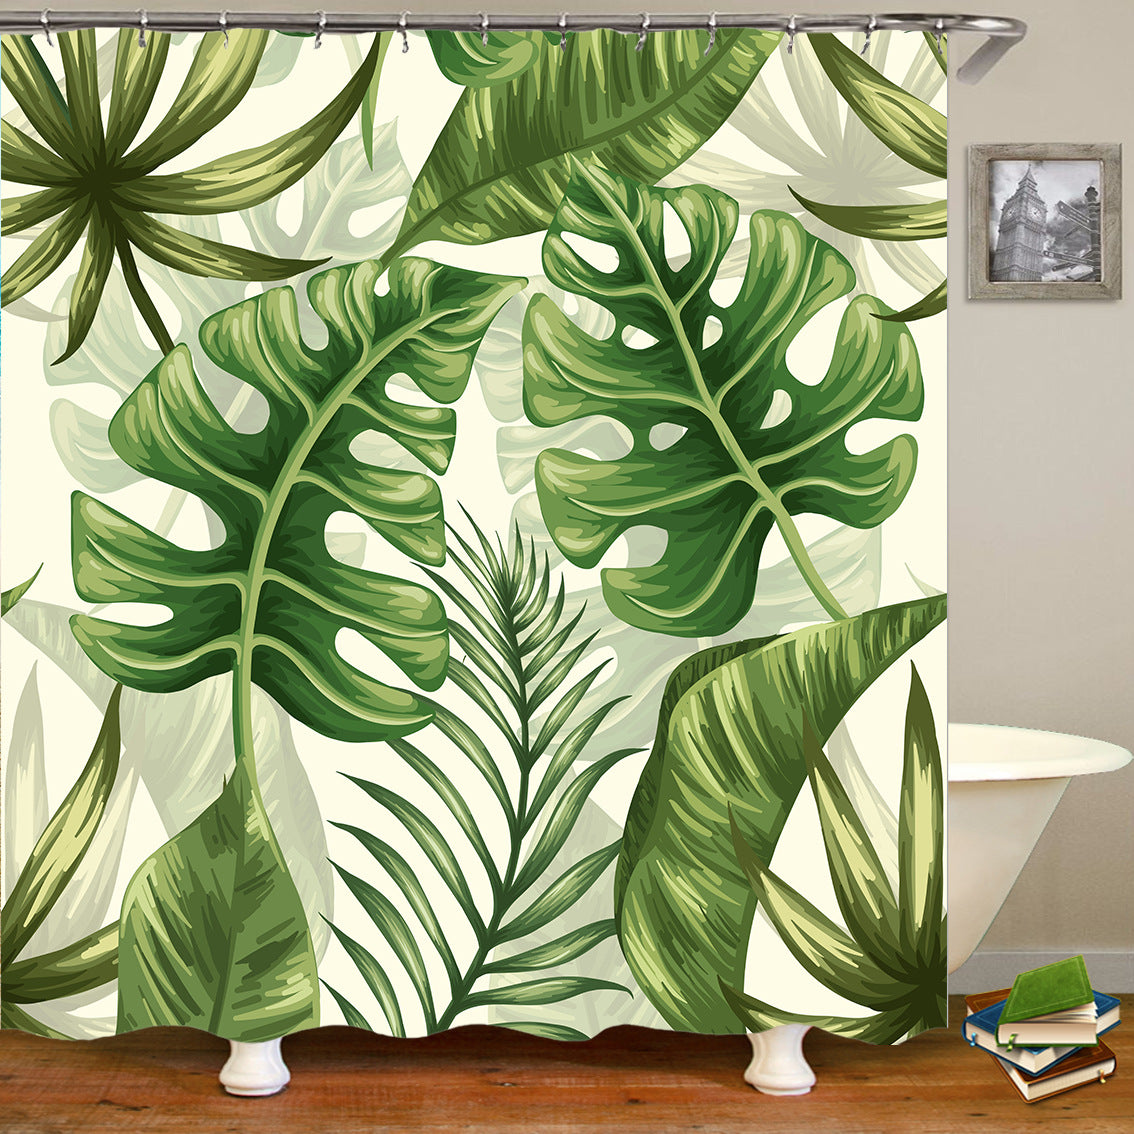 Tropical Plant Leaf Bath Curtain Decor - blitz-styles